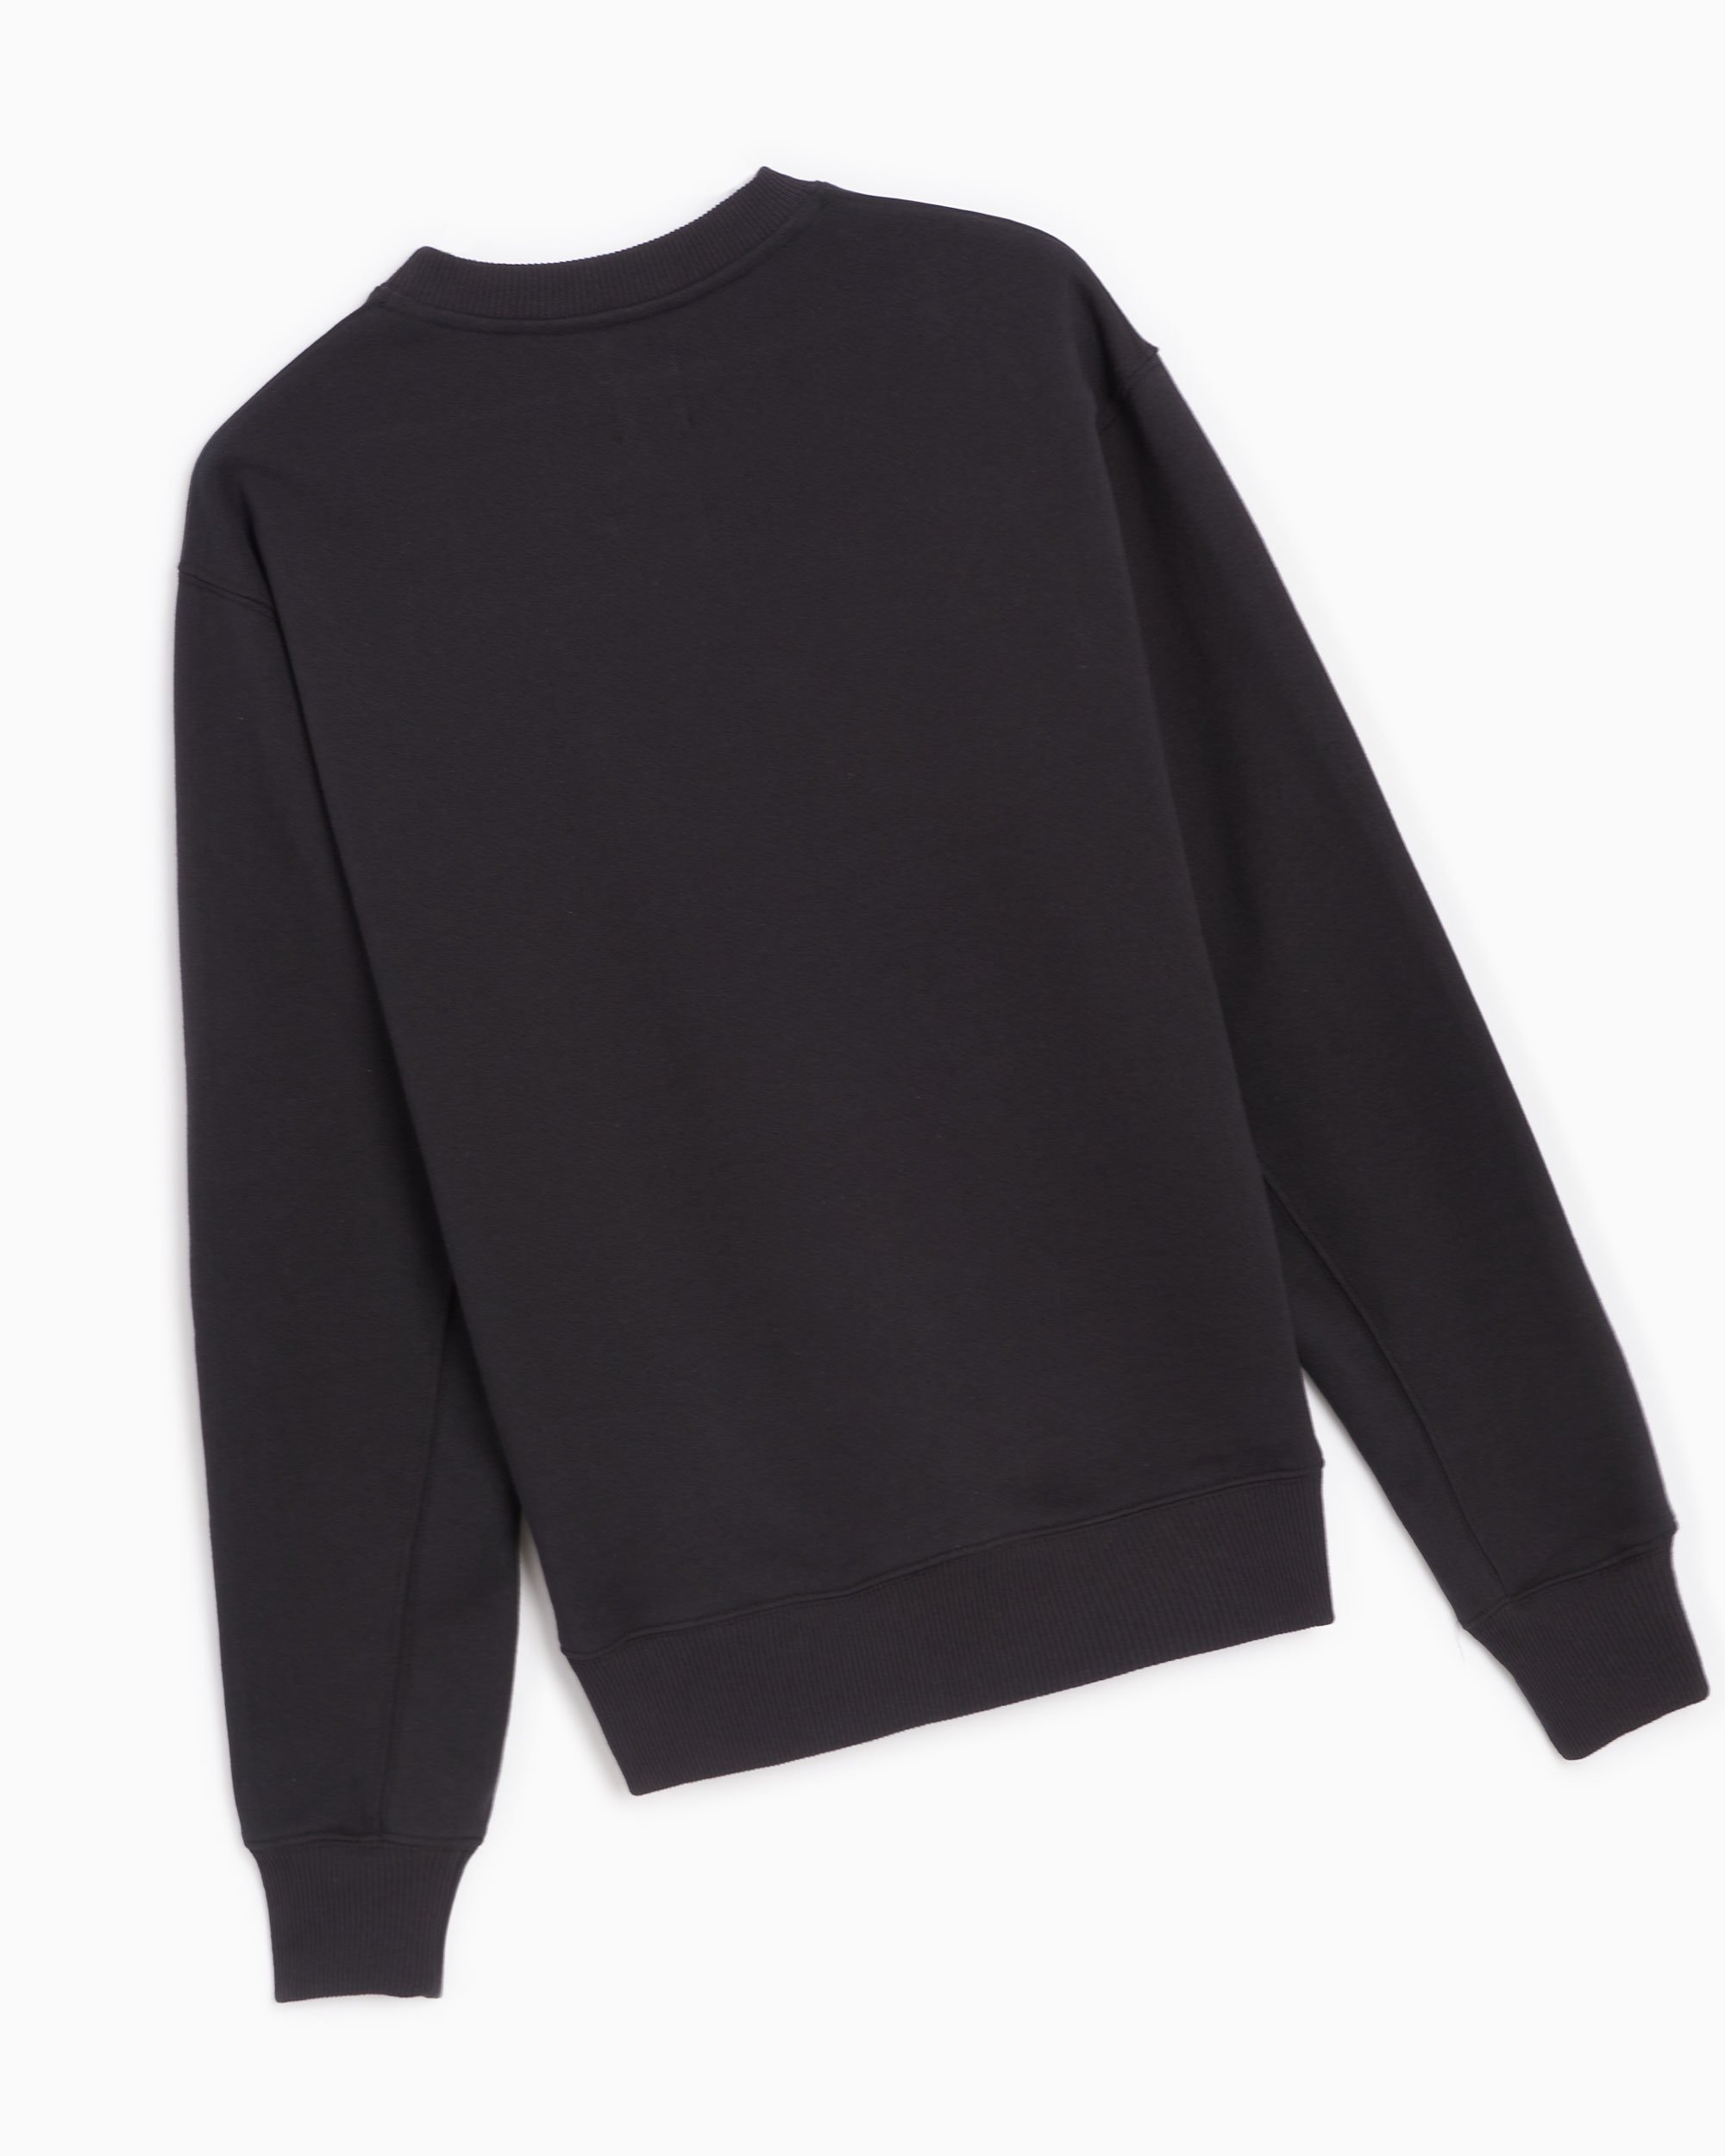 New Balance Made in USA Men's Core Sweatshirt Black MT21541-BK 